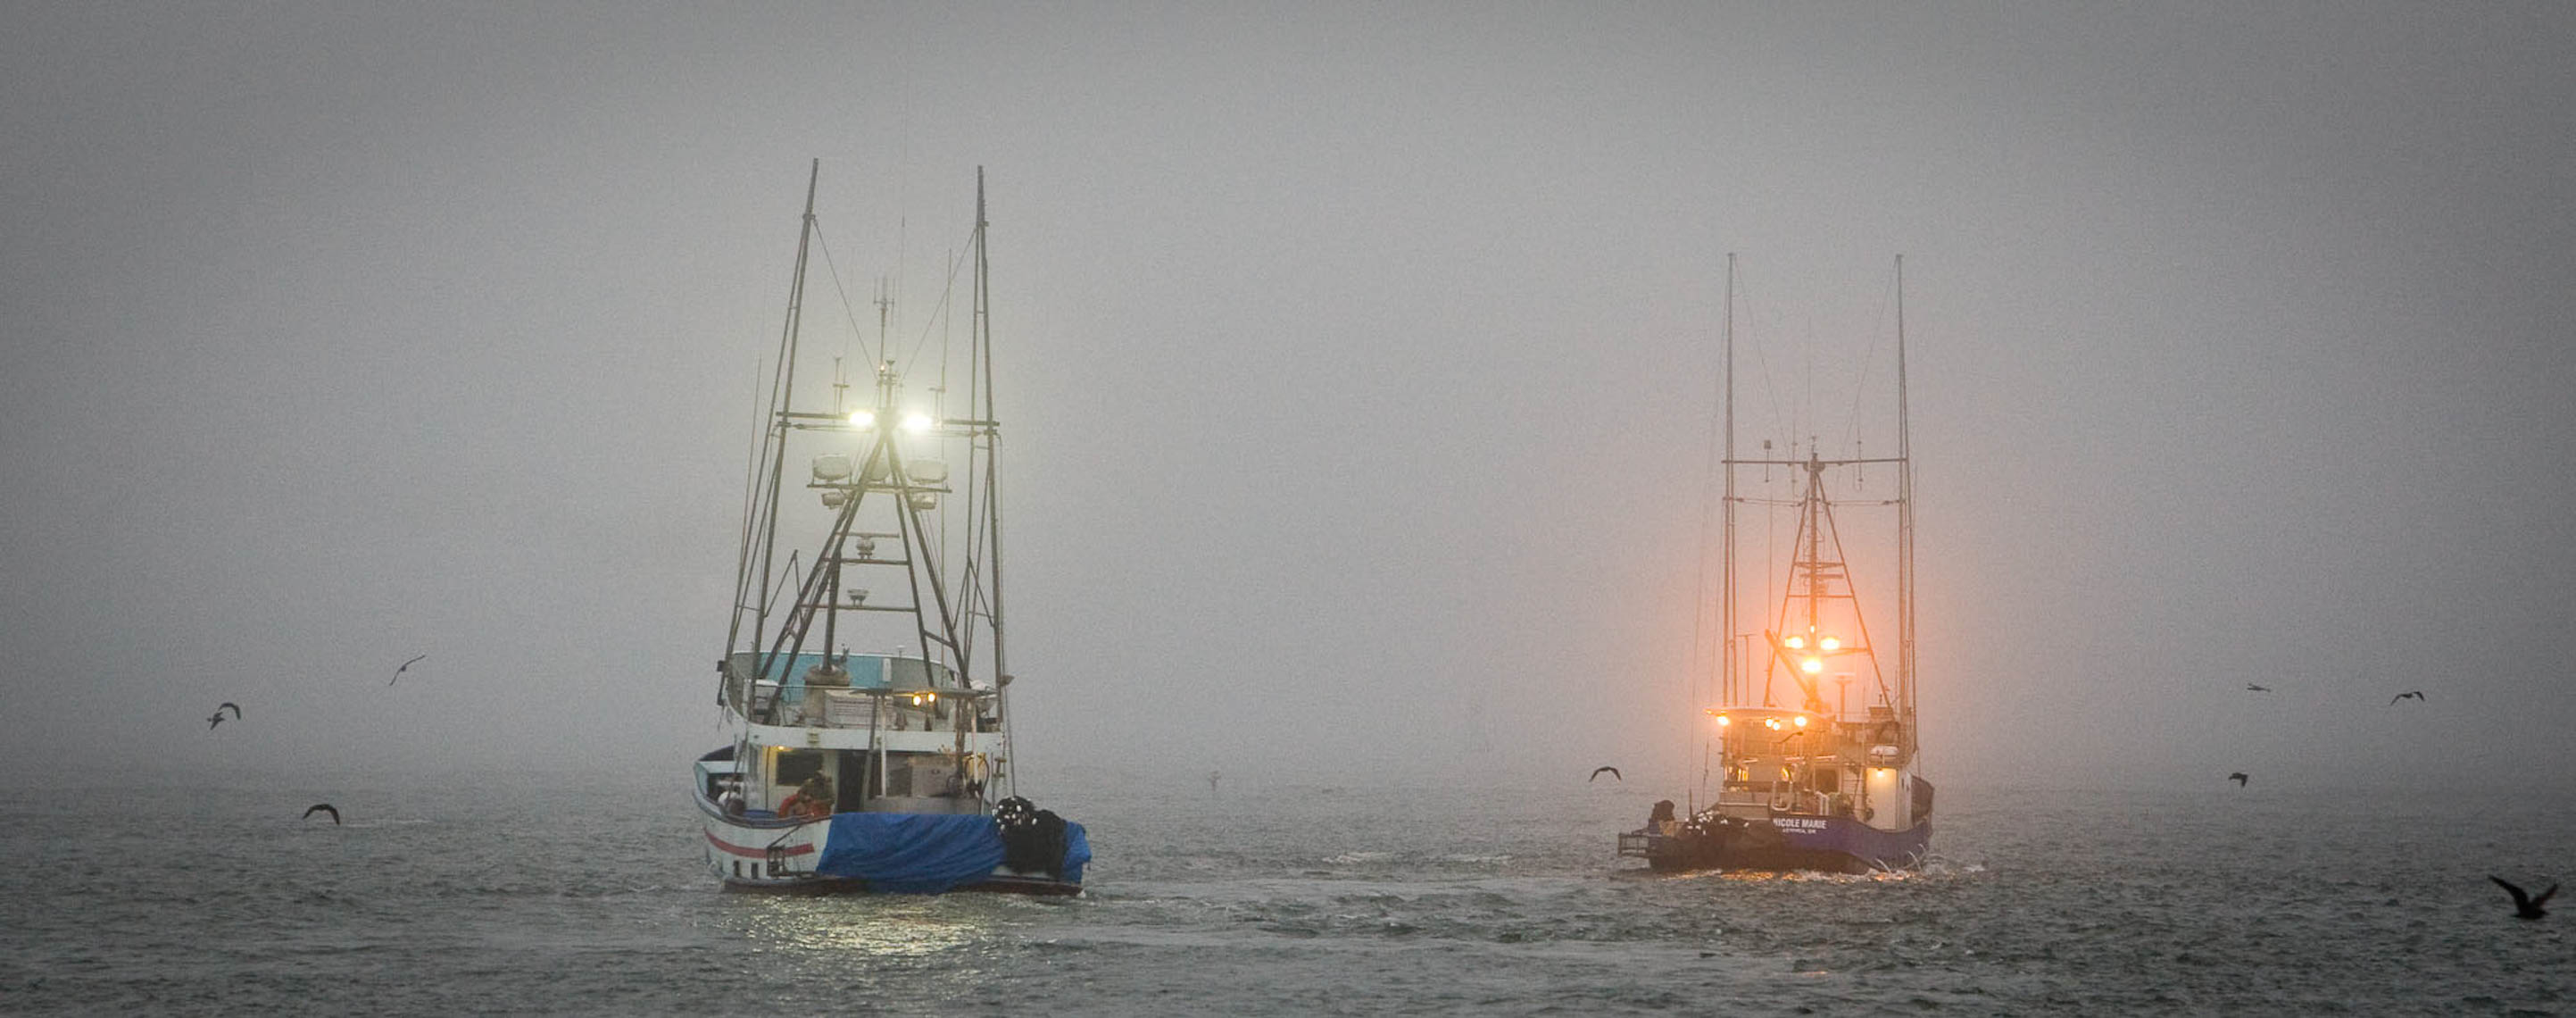 Tuna Boats in the Fog